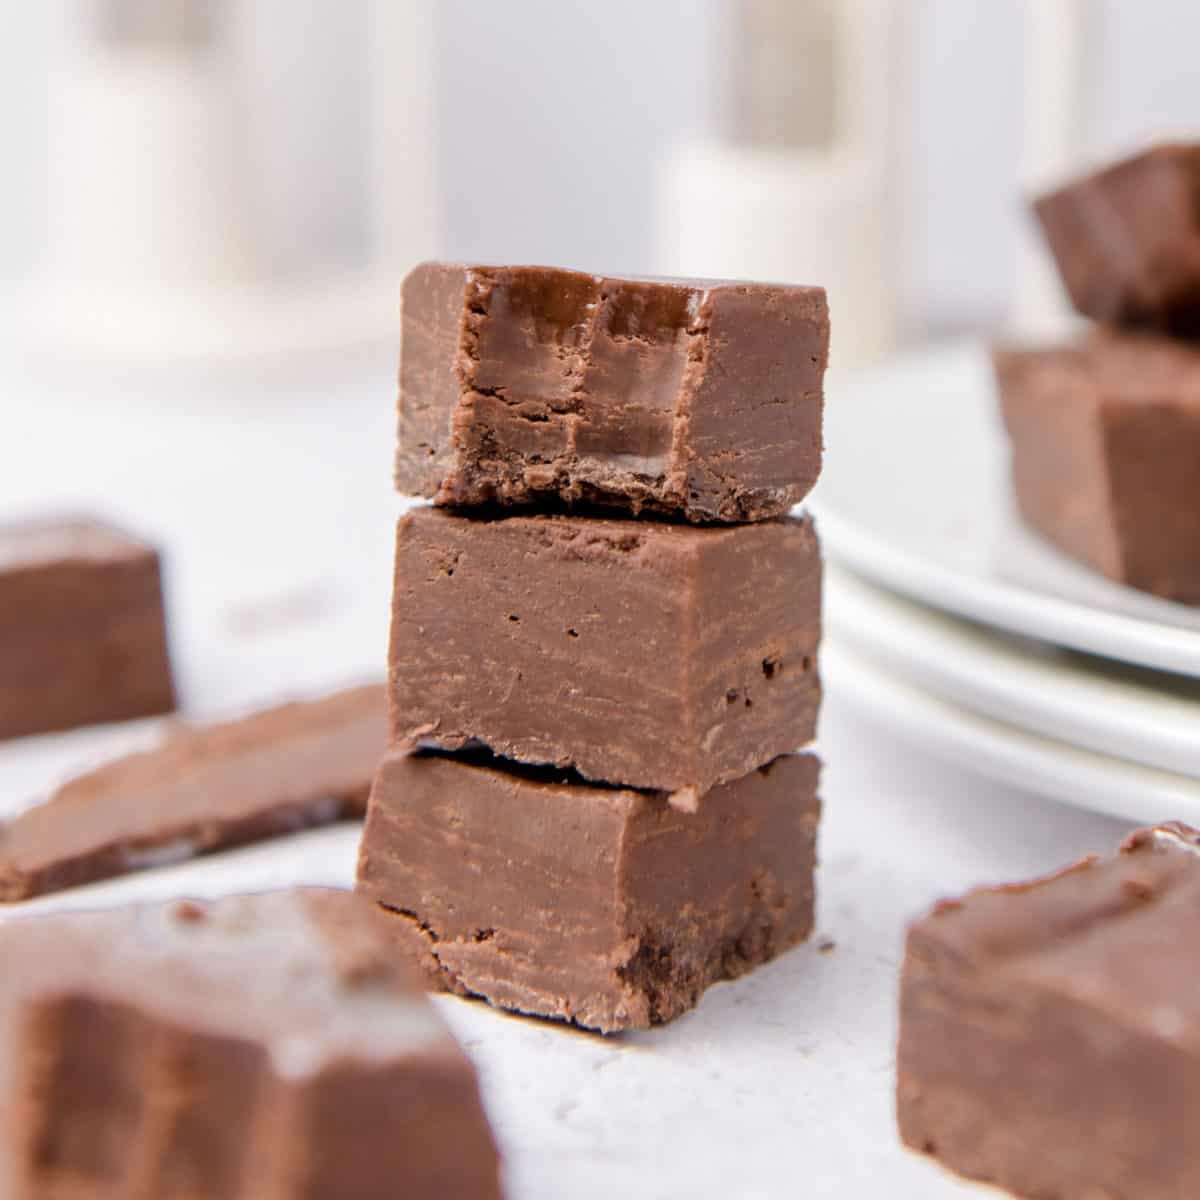 Pieces of chocolate fudge up close.